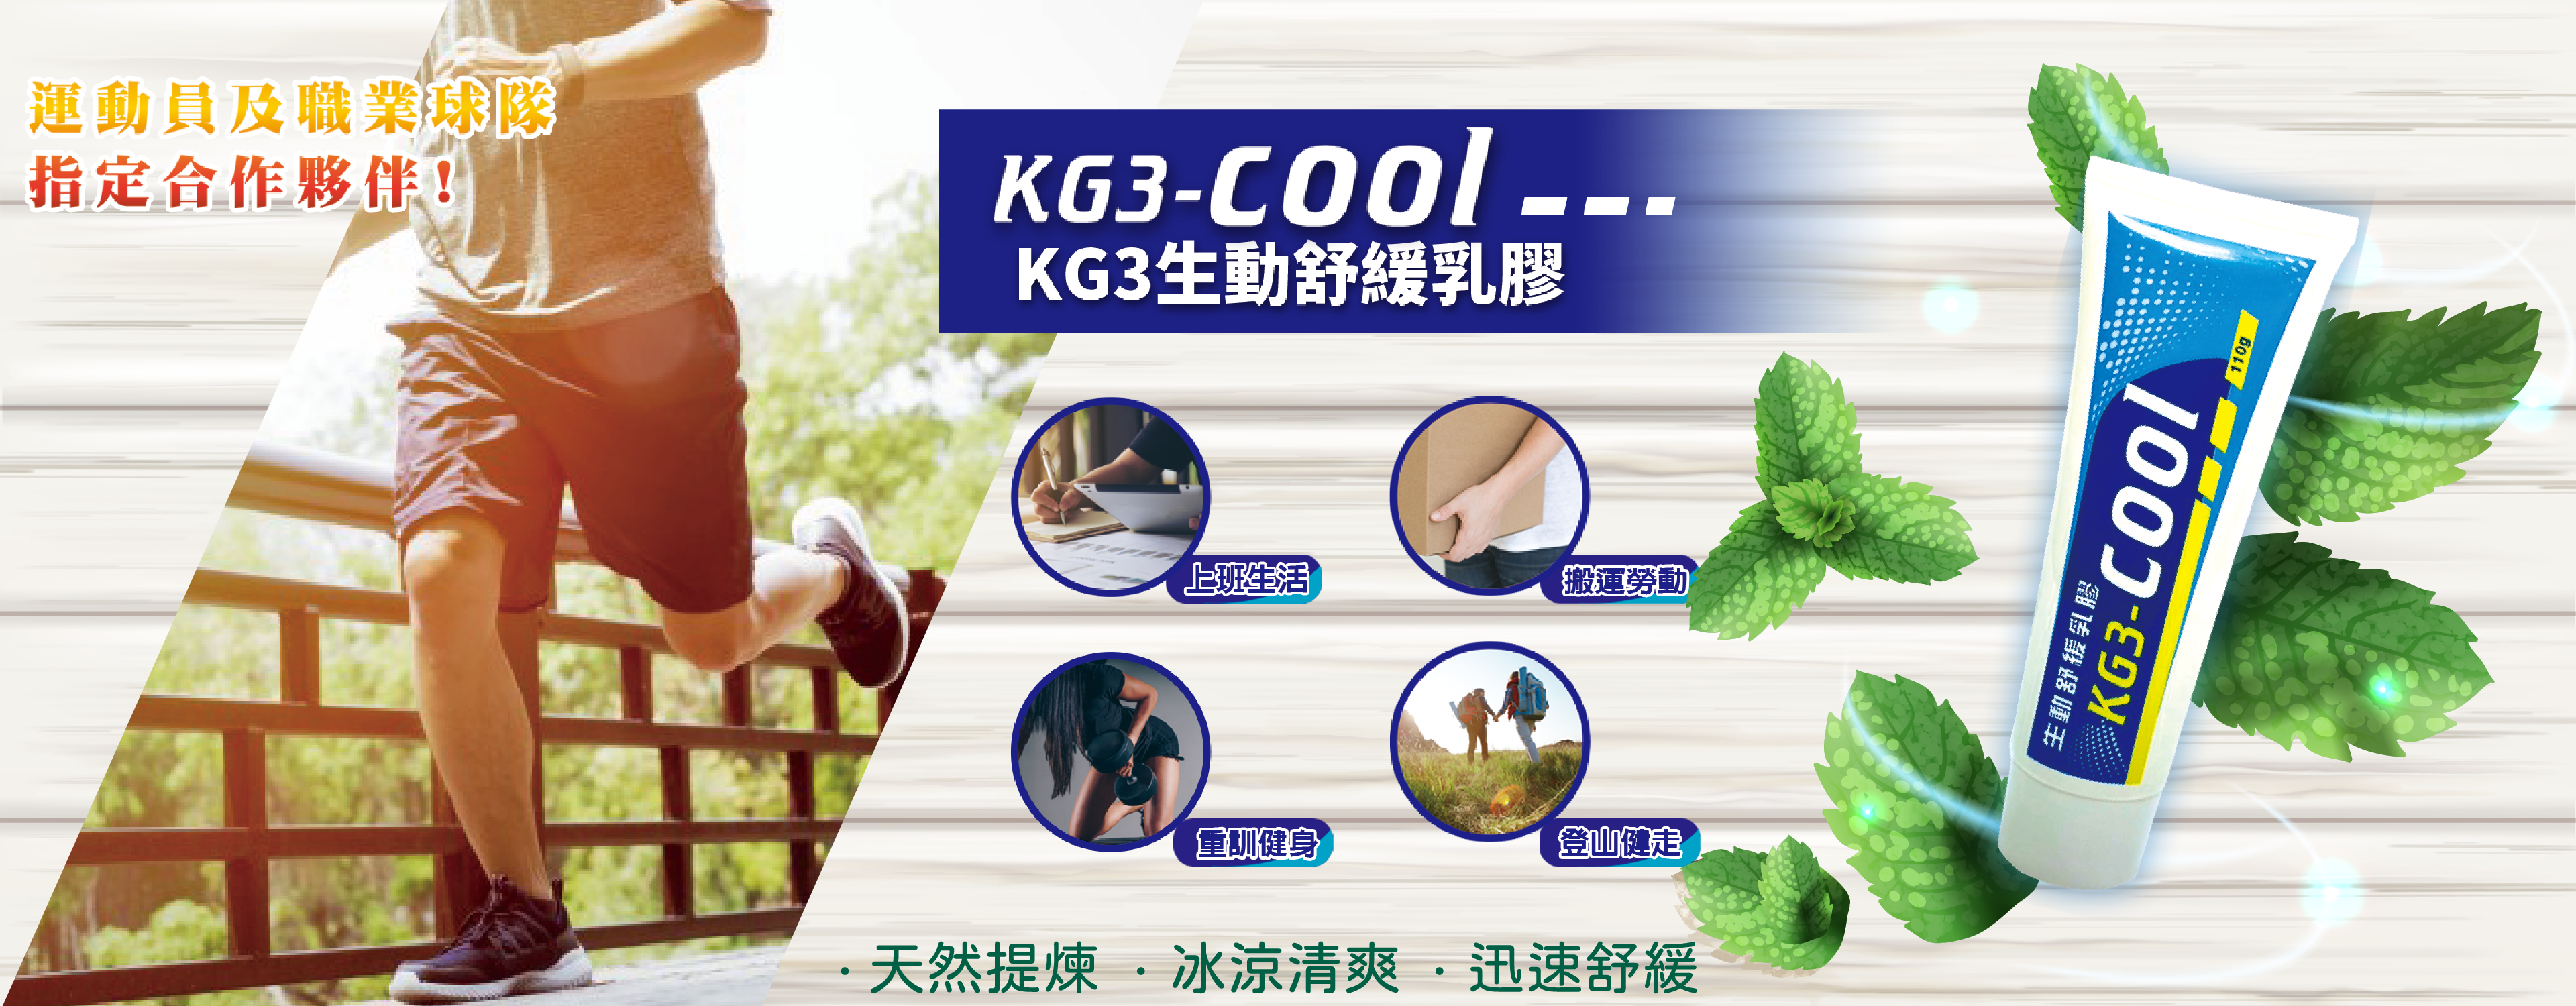 KG3-cool